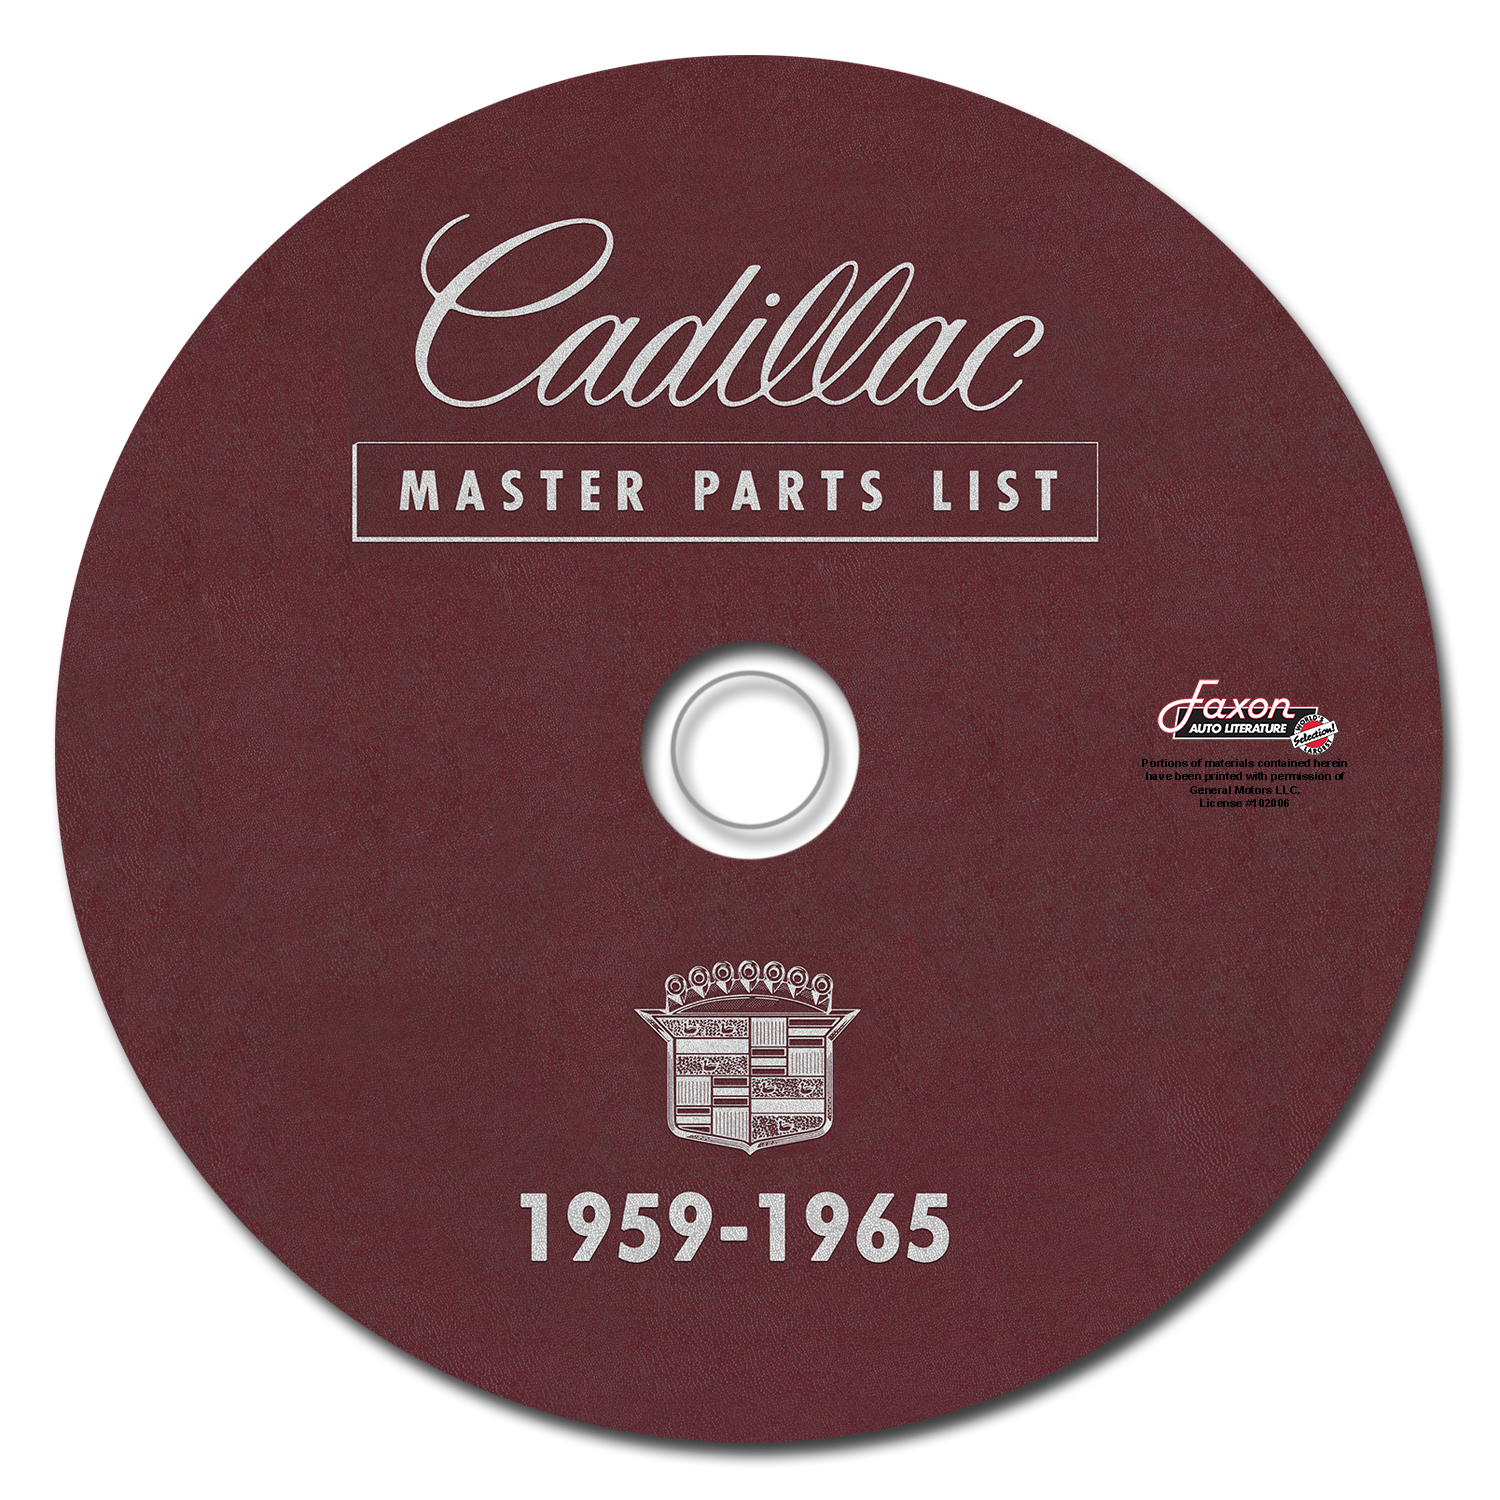 1959-1965 Cadillac Master Parts Book on CD-ROM